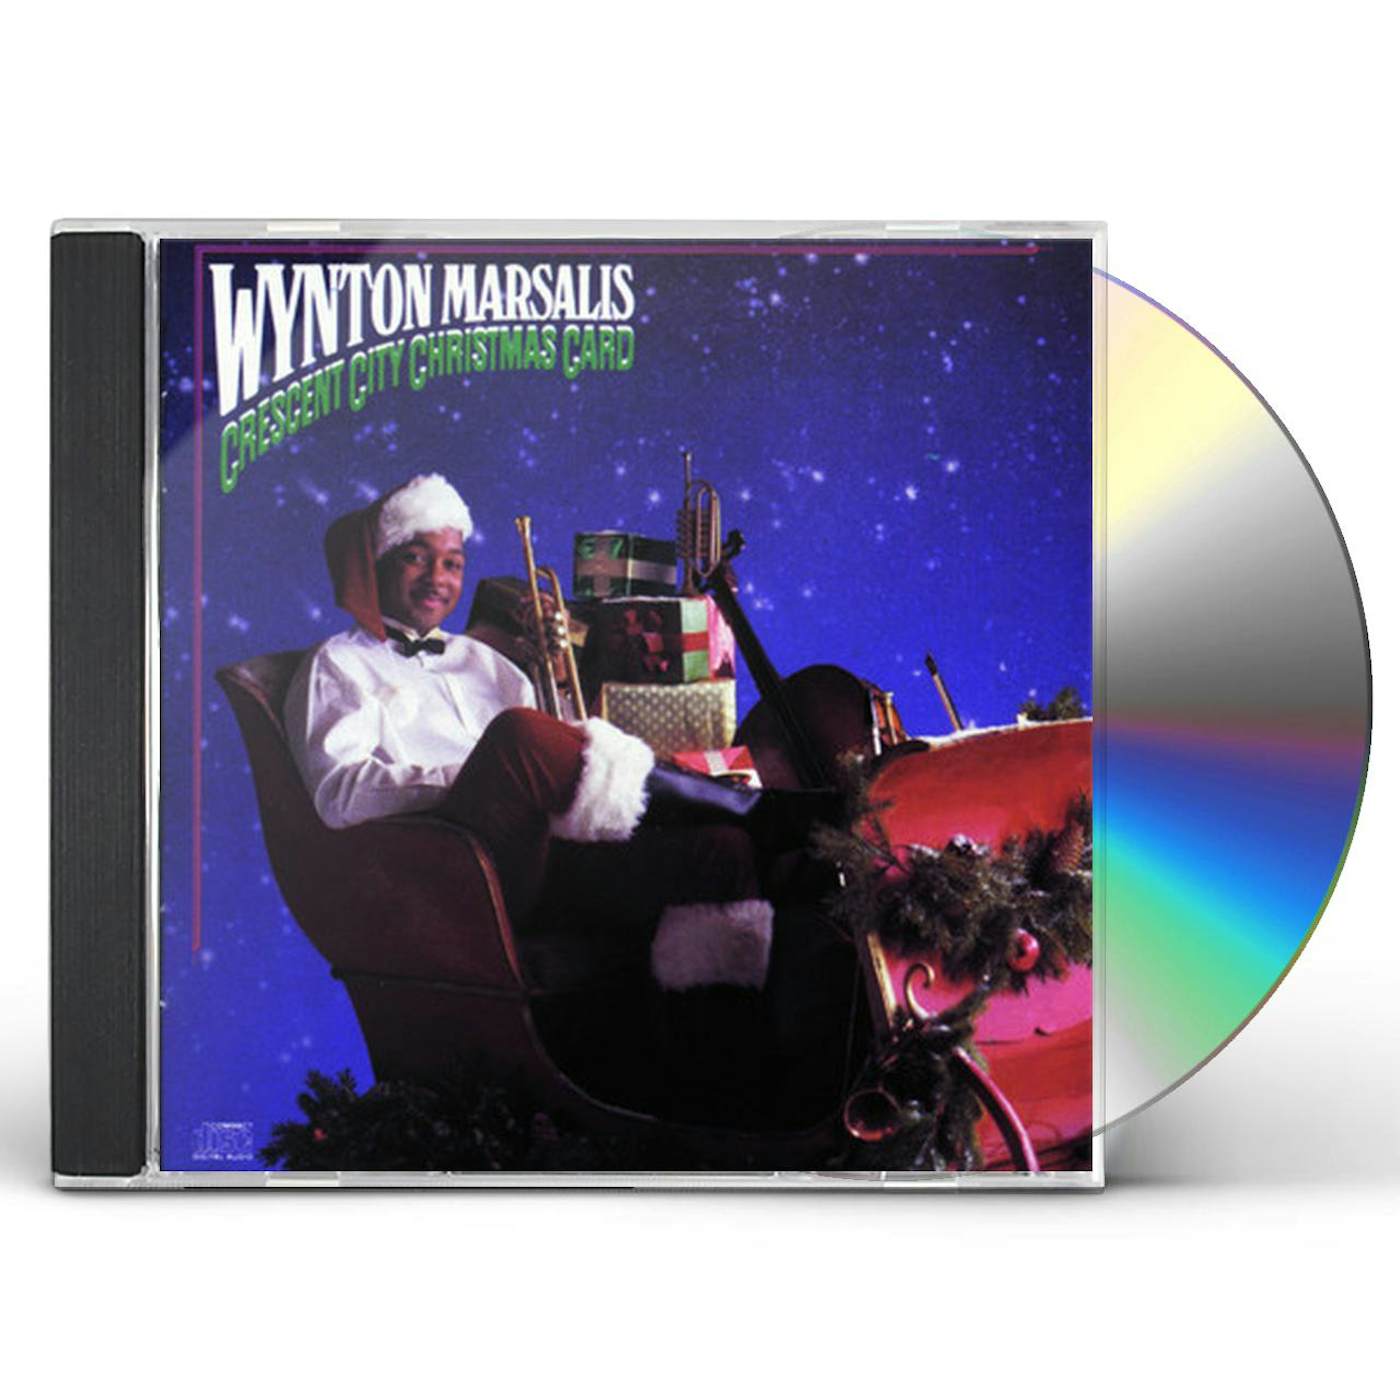 Wynton Marsalis CRESCENT CITY CHRISTMAS CARD CD $15.99